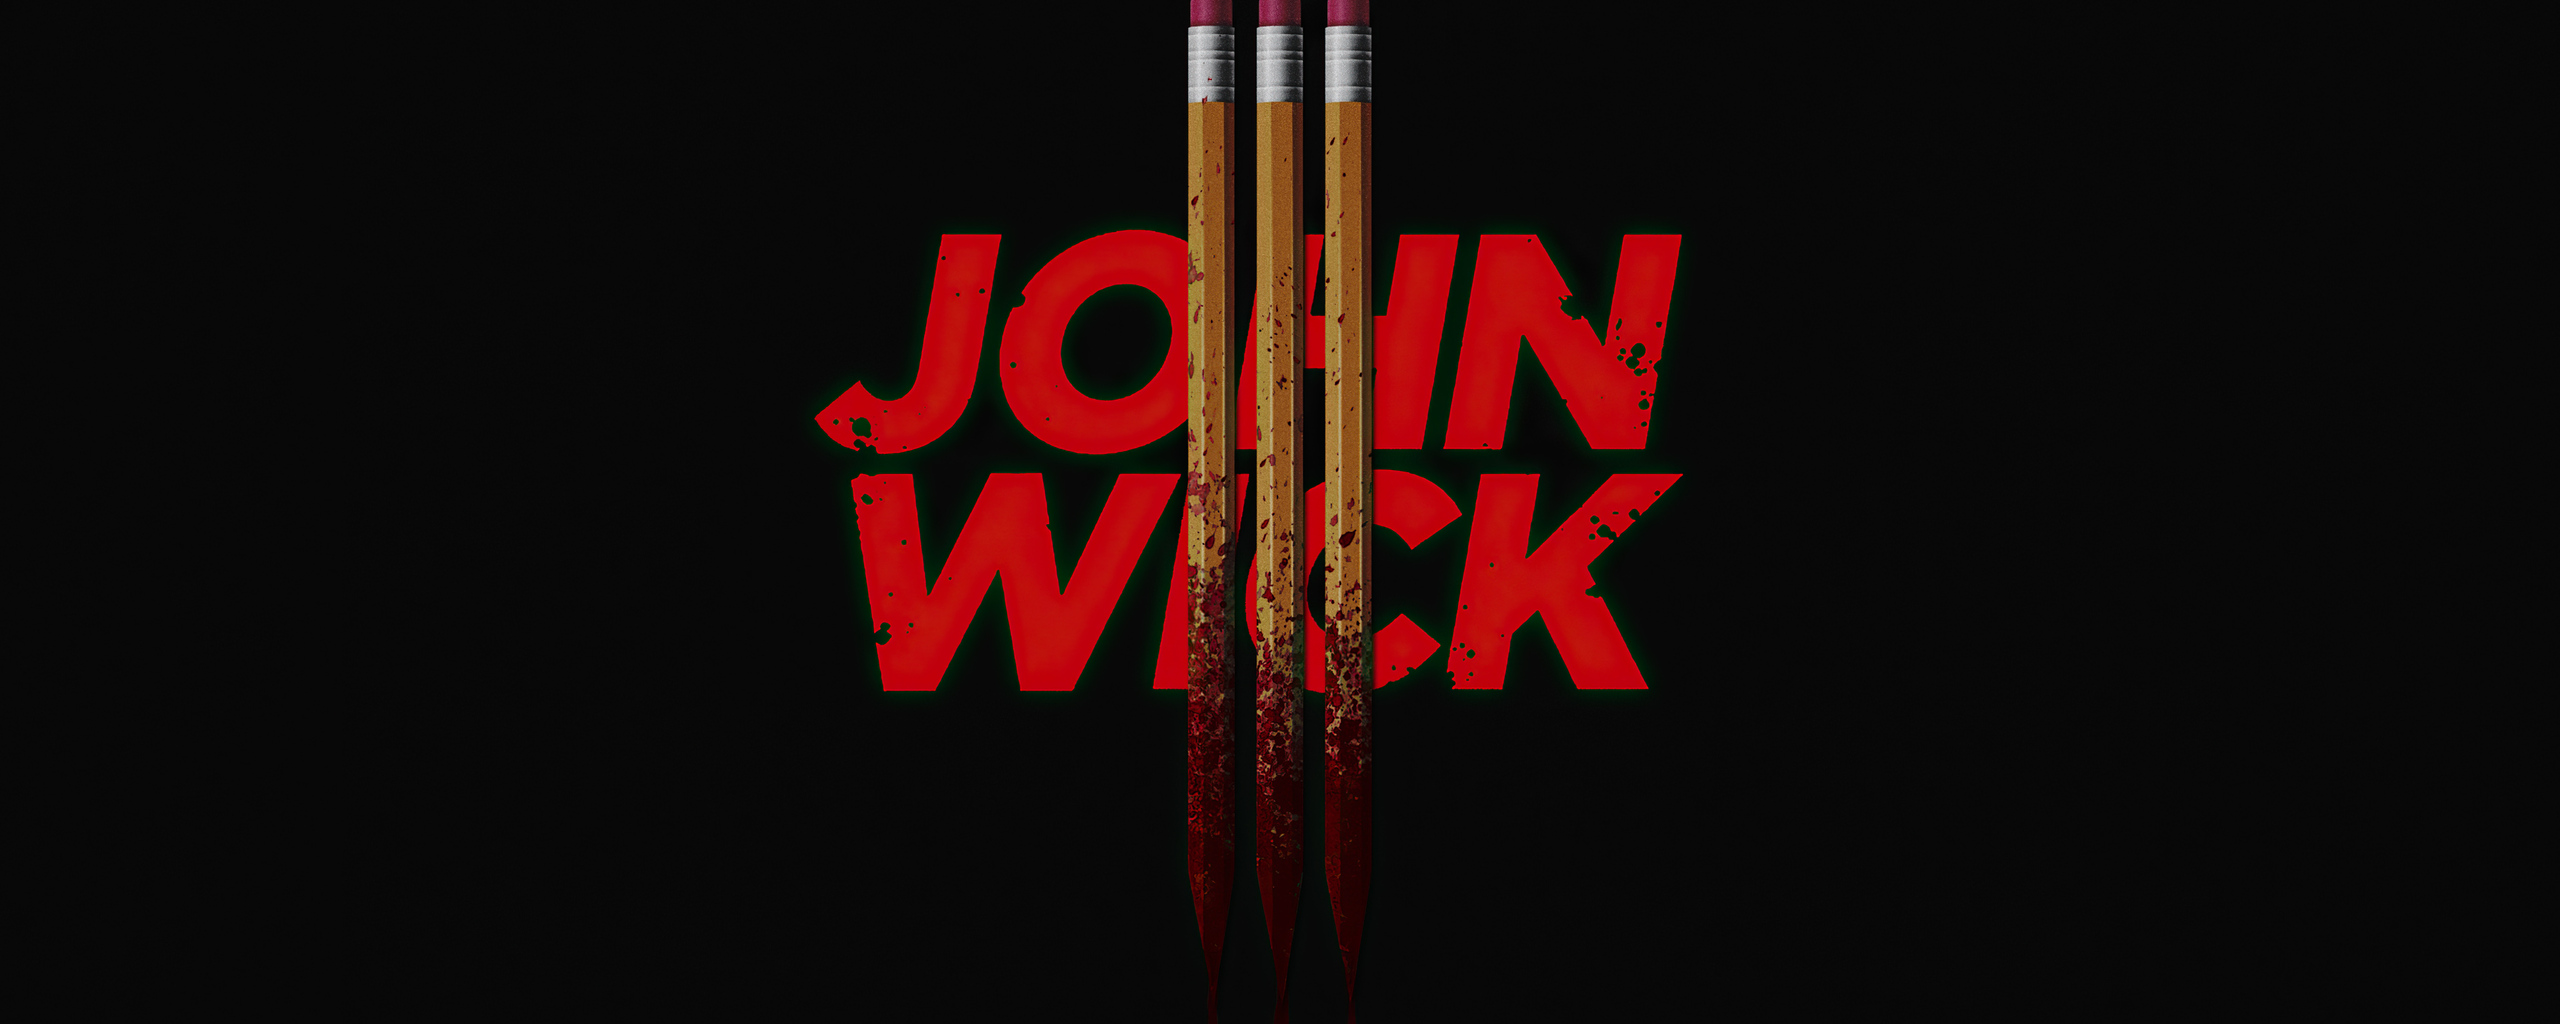 joh-wick-3-dark-poster-sa.jpg